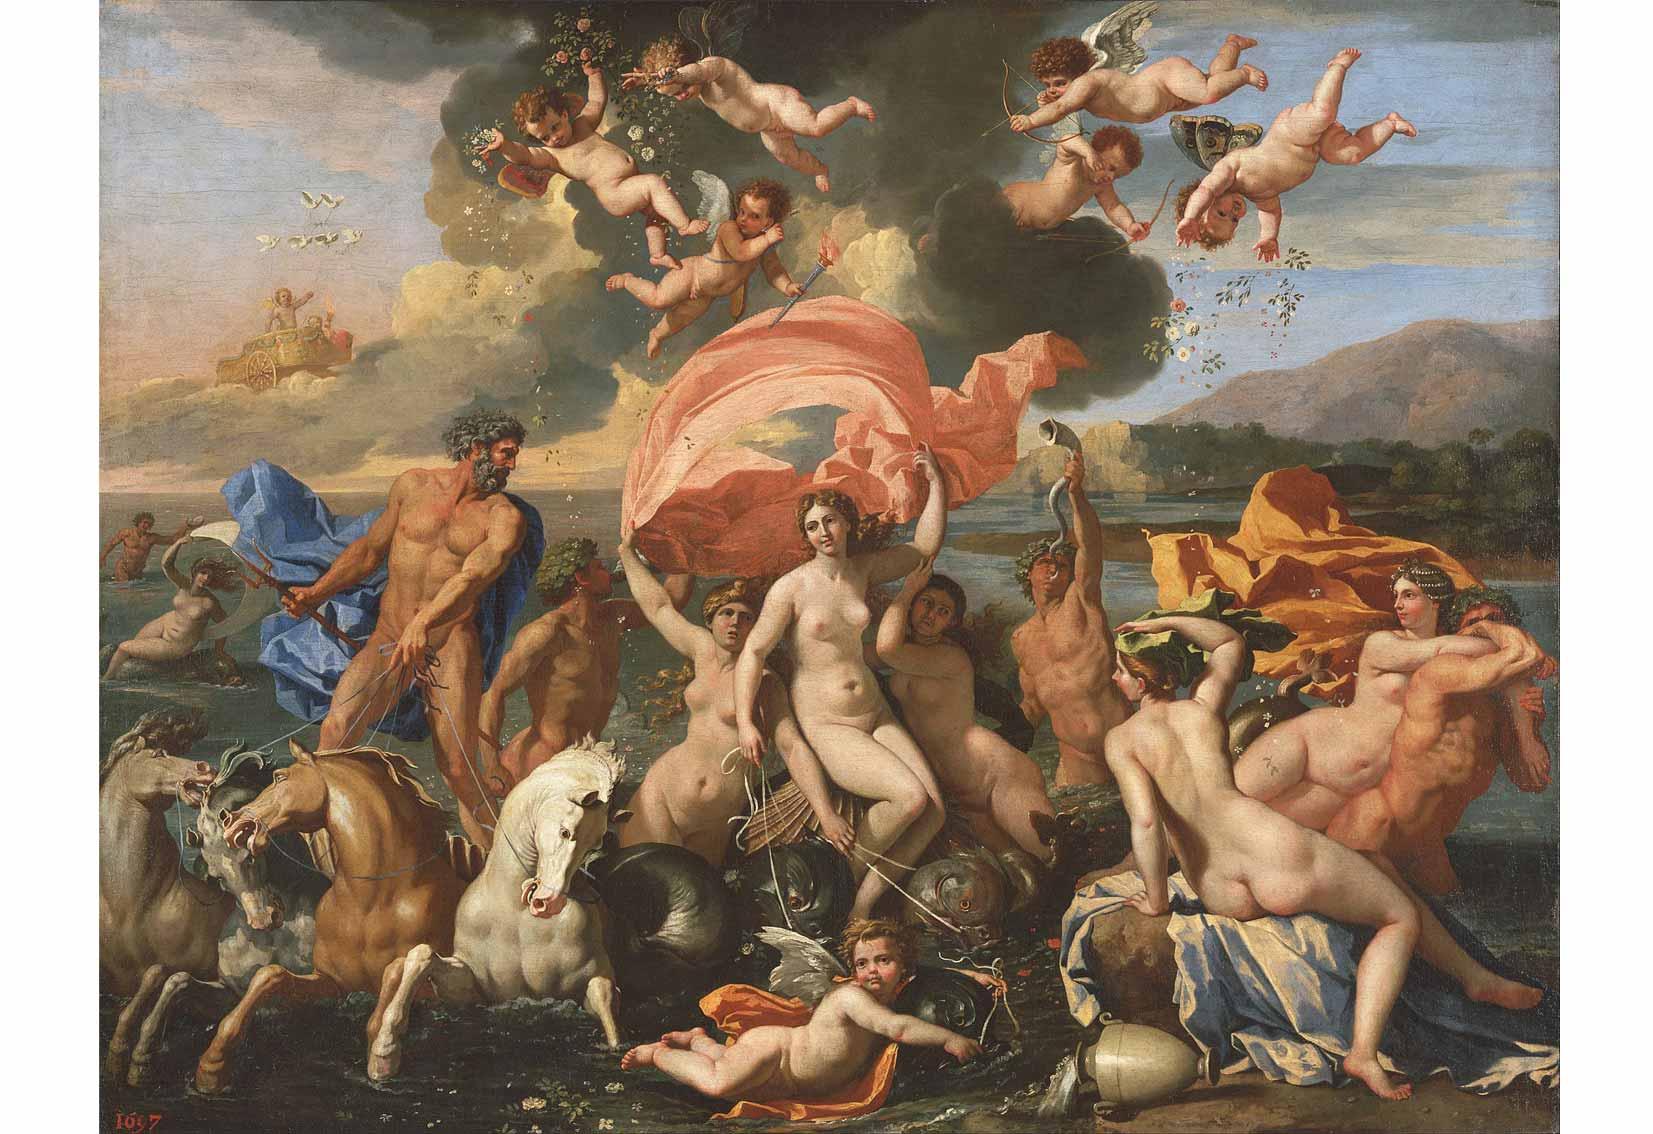 Nicolas Poussin, The Birth of Venus, 1635 or 1636.